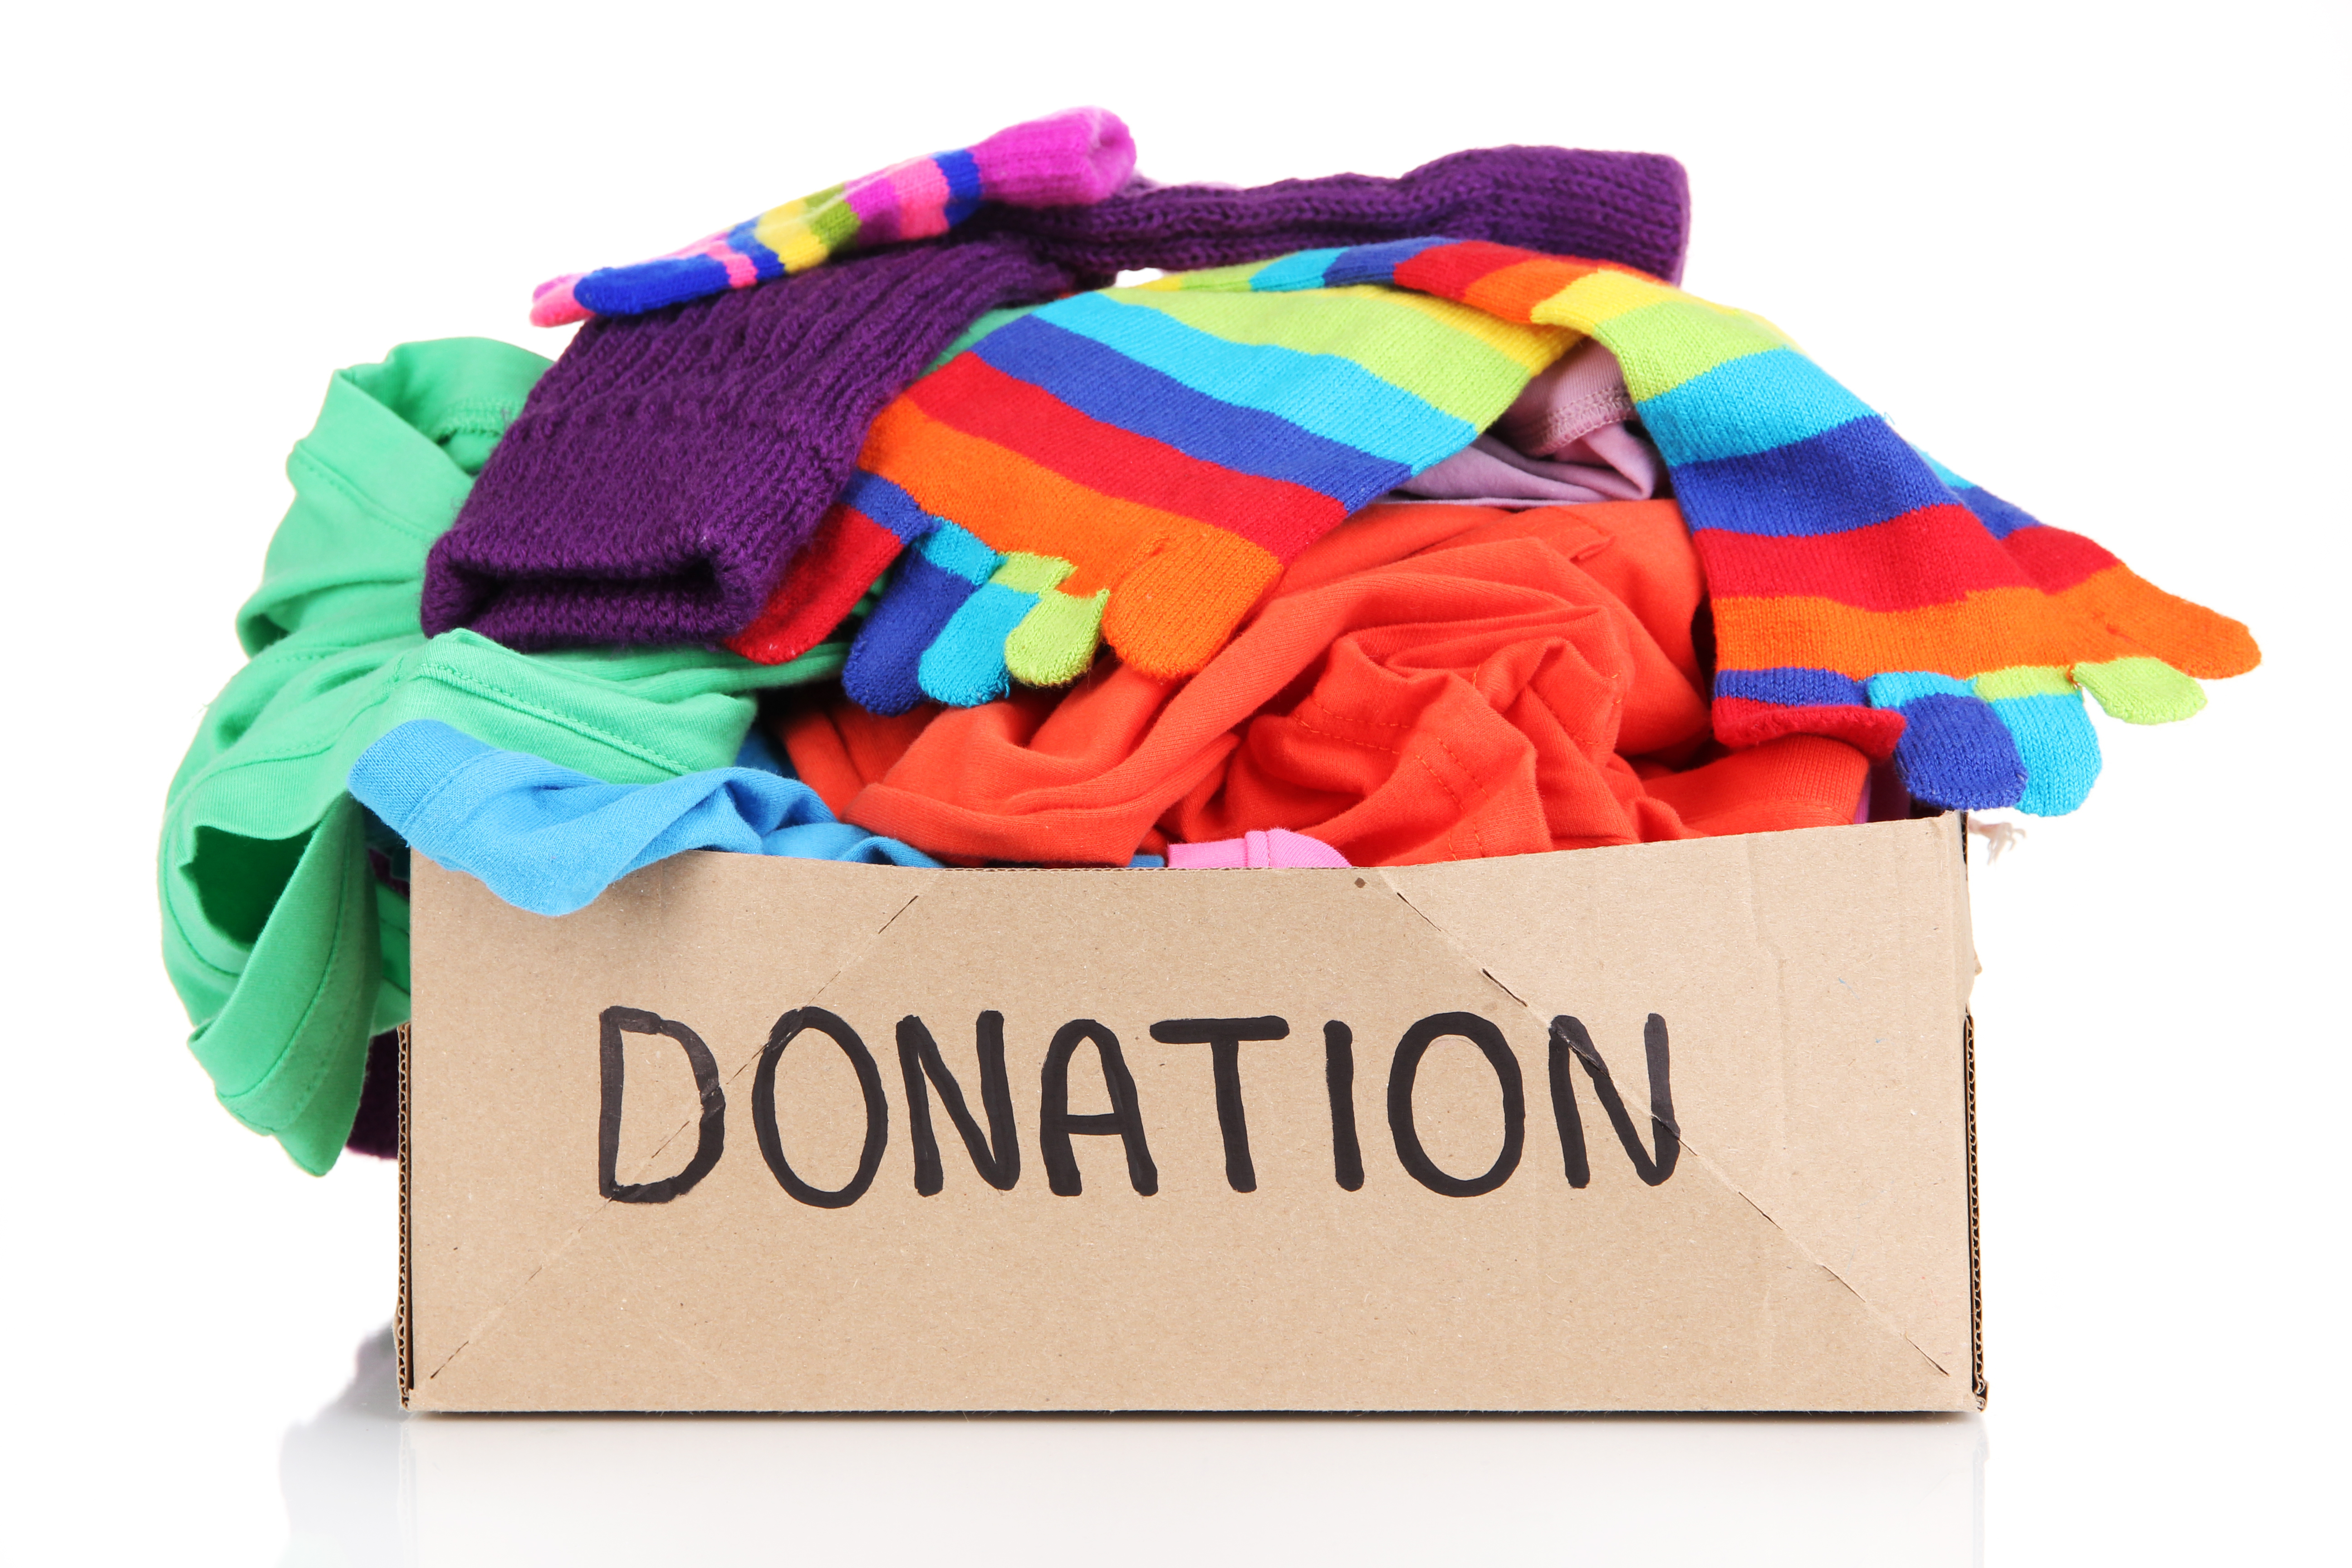 closet clipart clothing donation